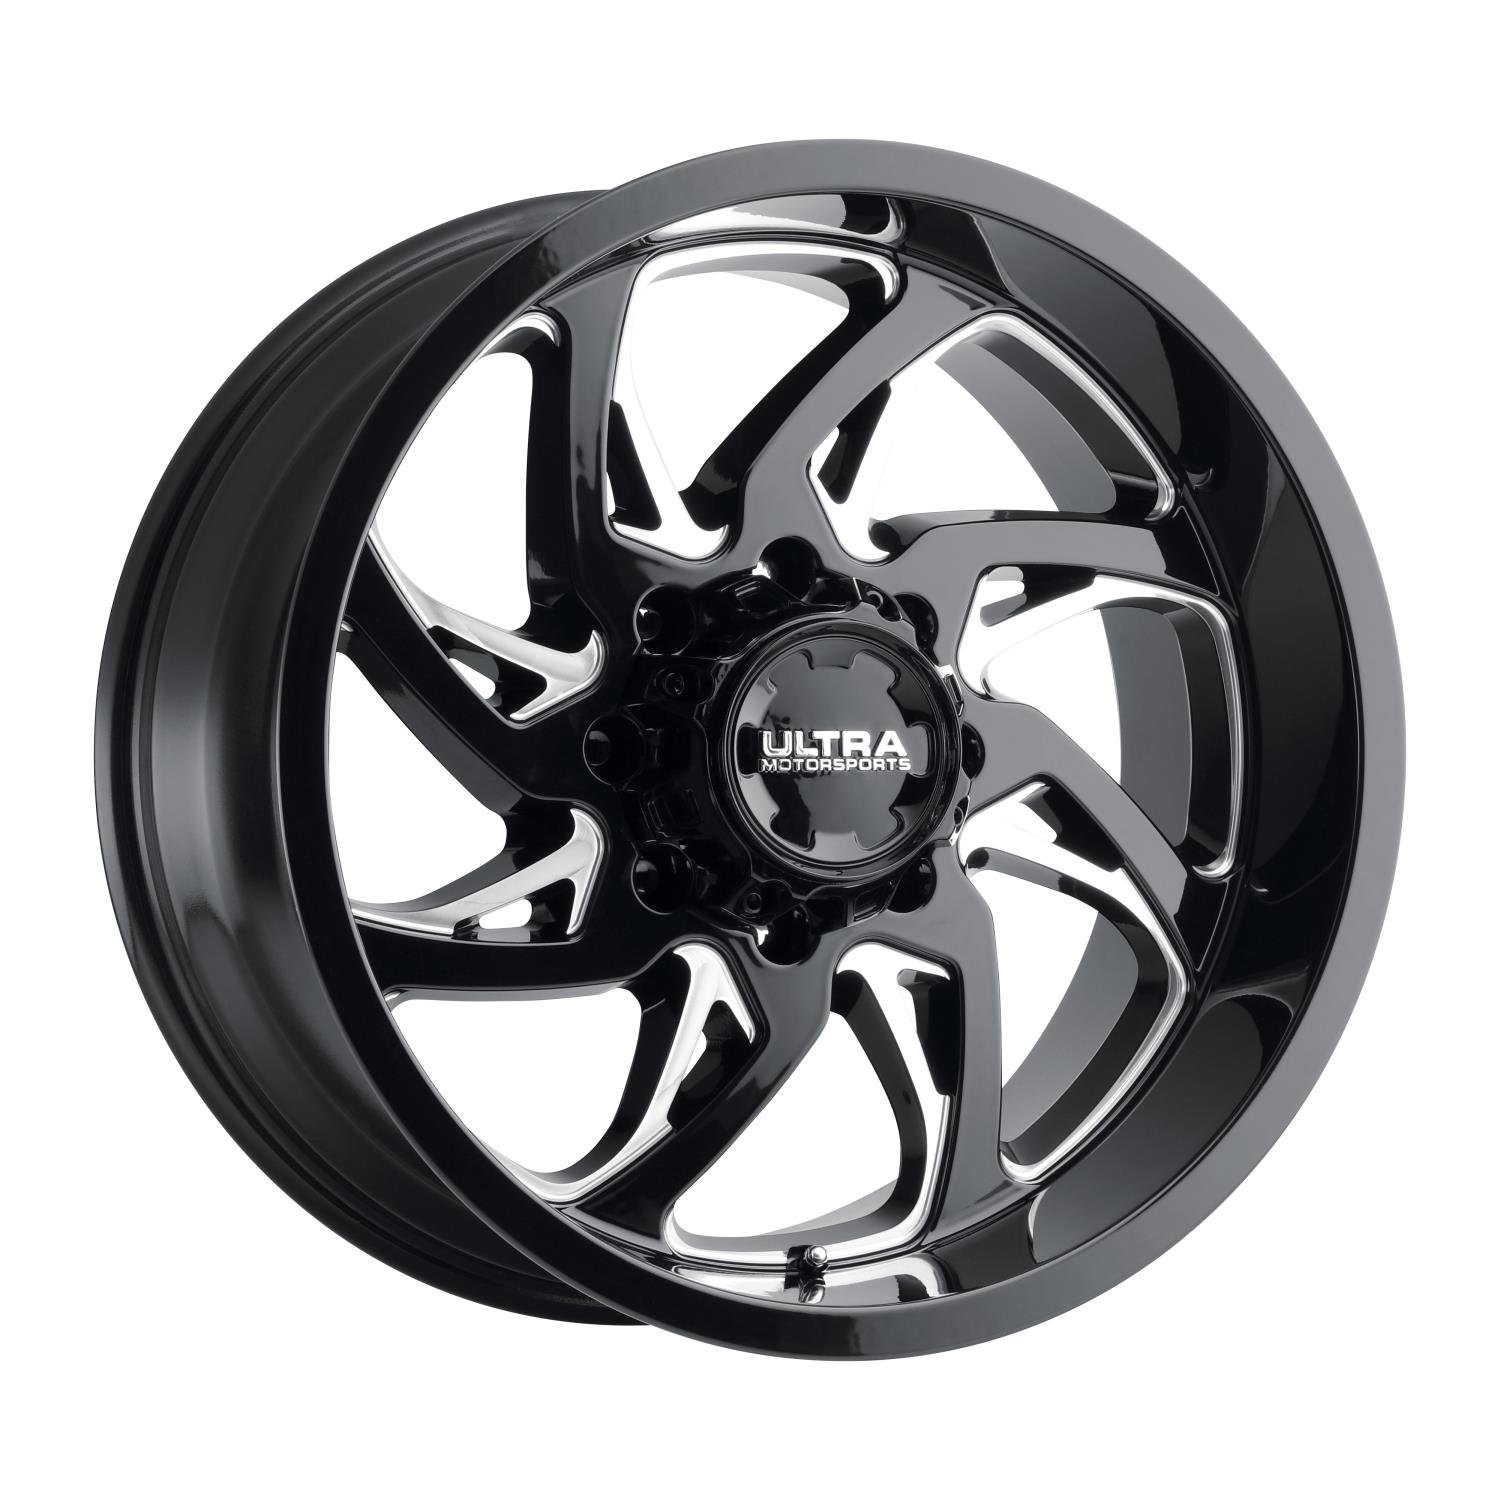 230-Series Villain Wheel, Size: 20x9", Bolt Pattern: 5x150 mm [Gloss Black w/Milled Accents]